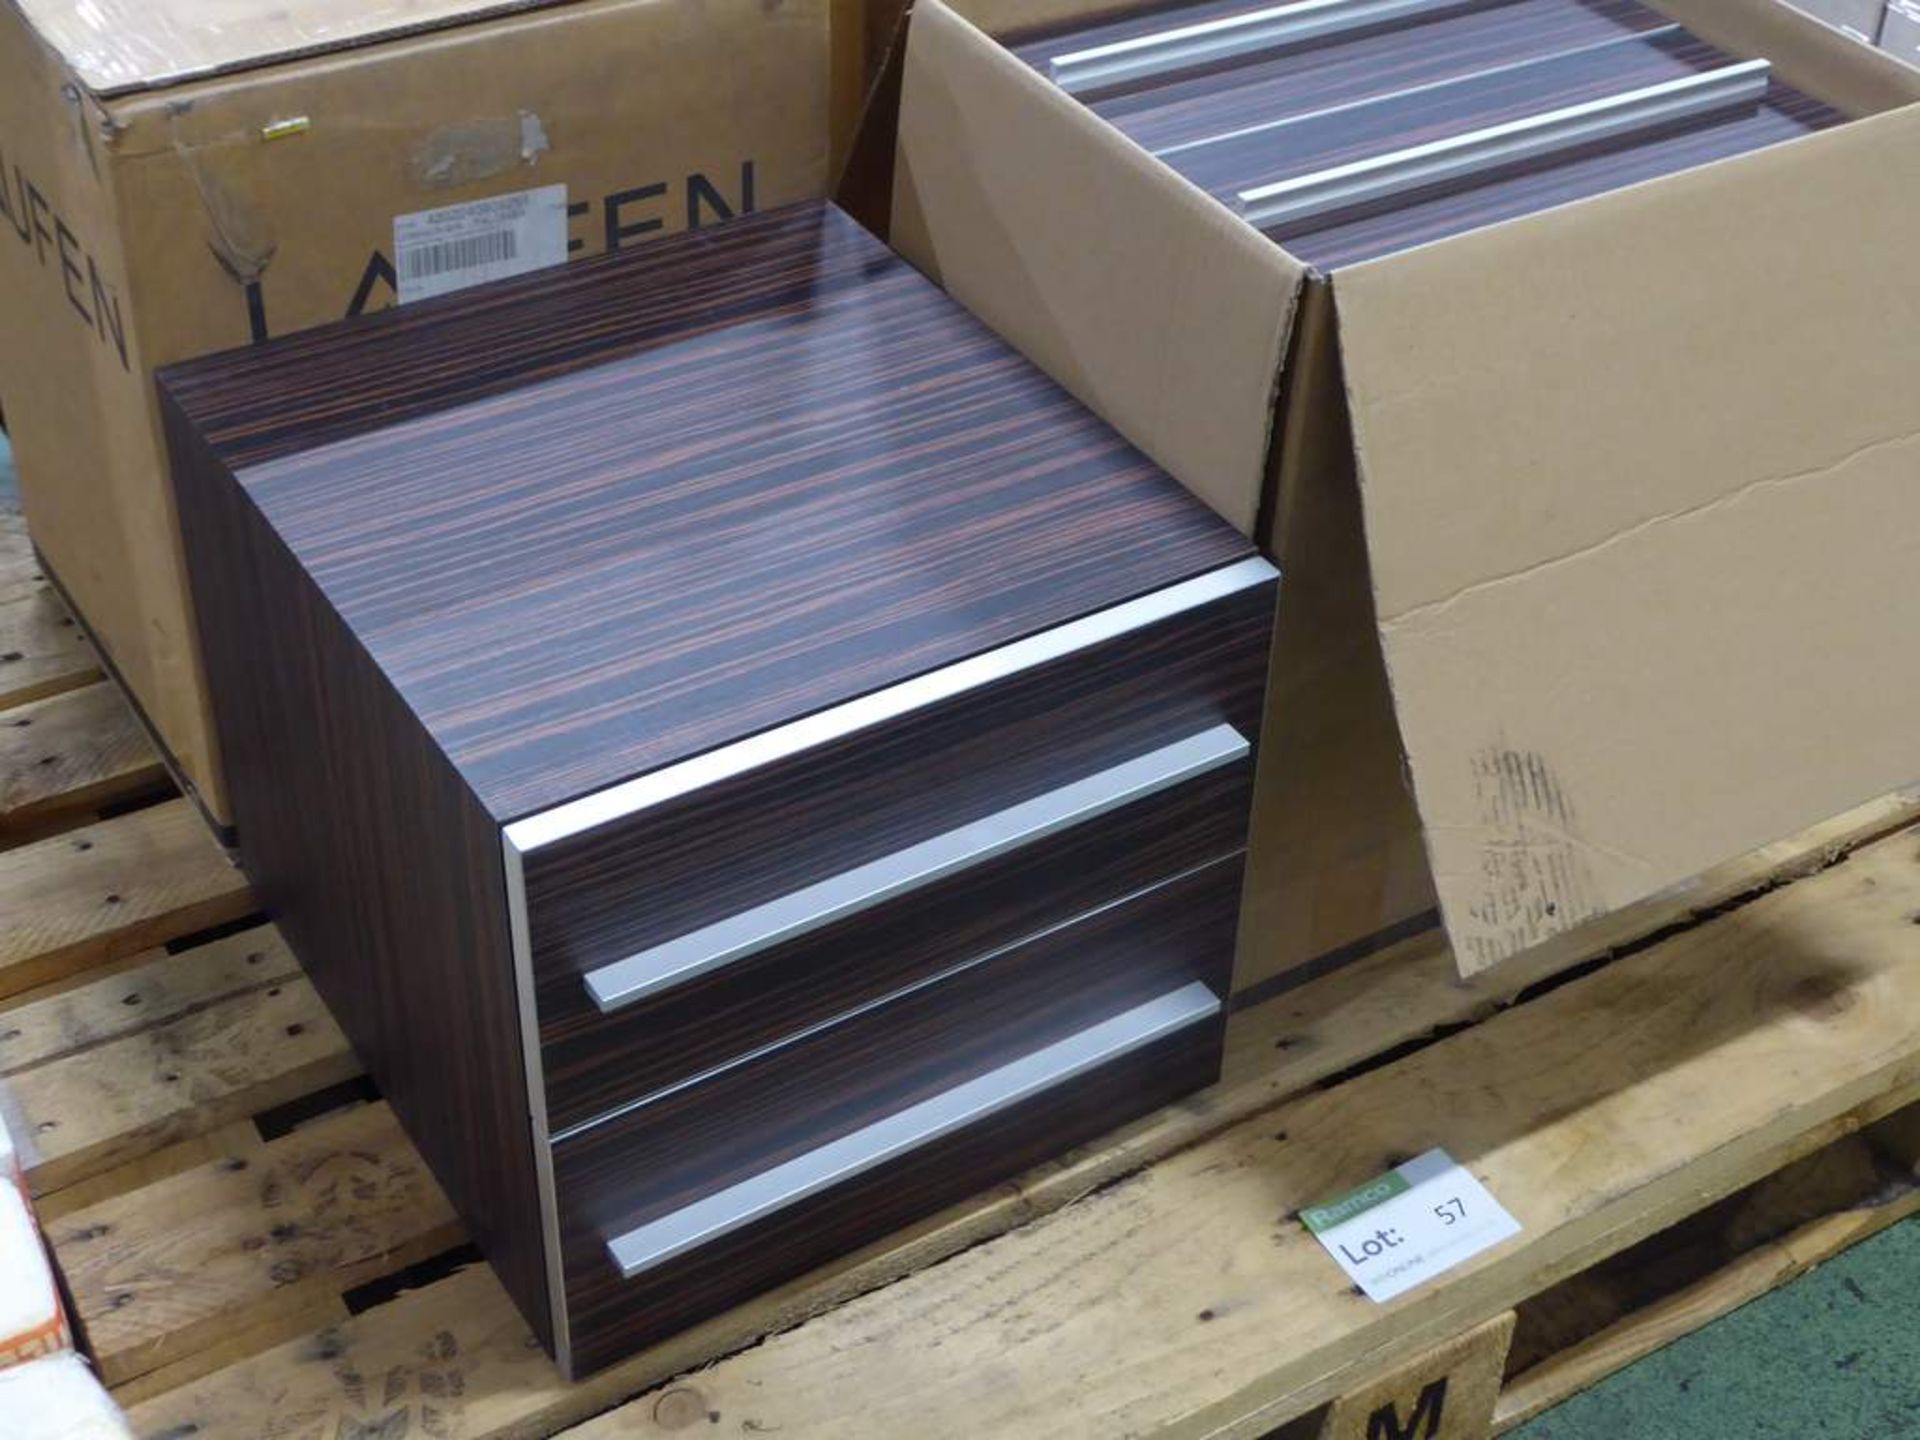 2x Laufen 2 drawer cabinets 40x43x36cm - Image 2 of 2